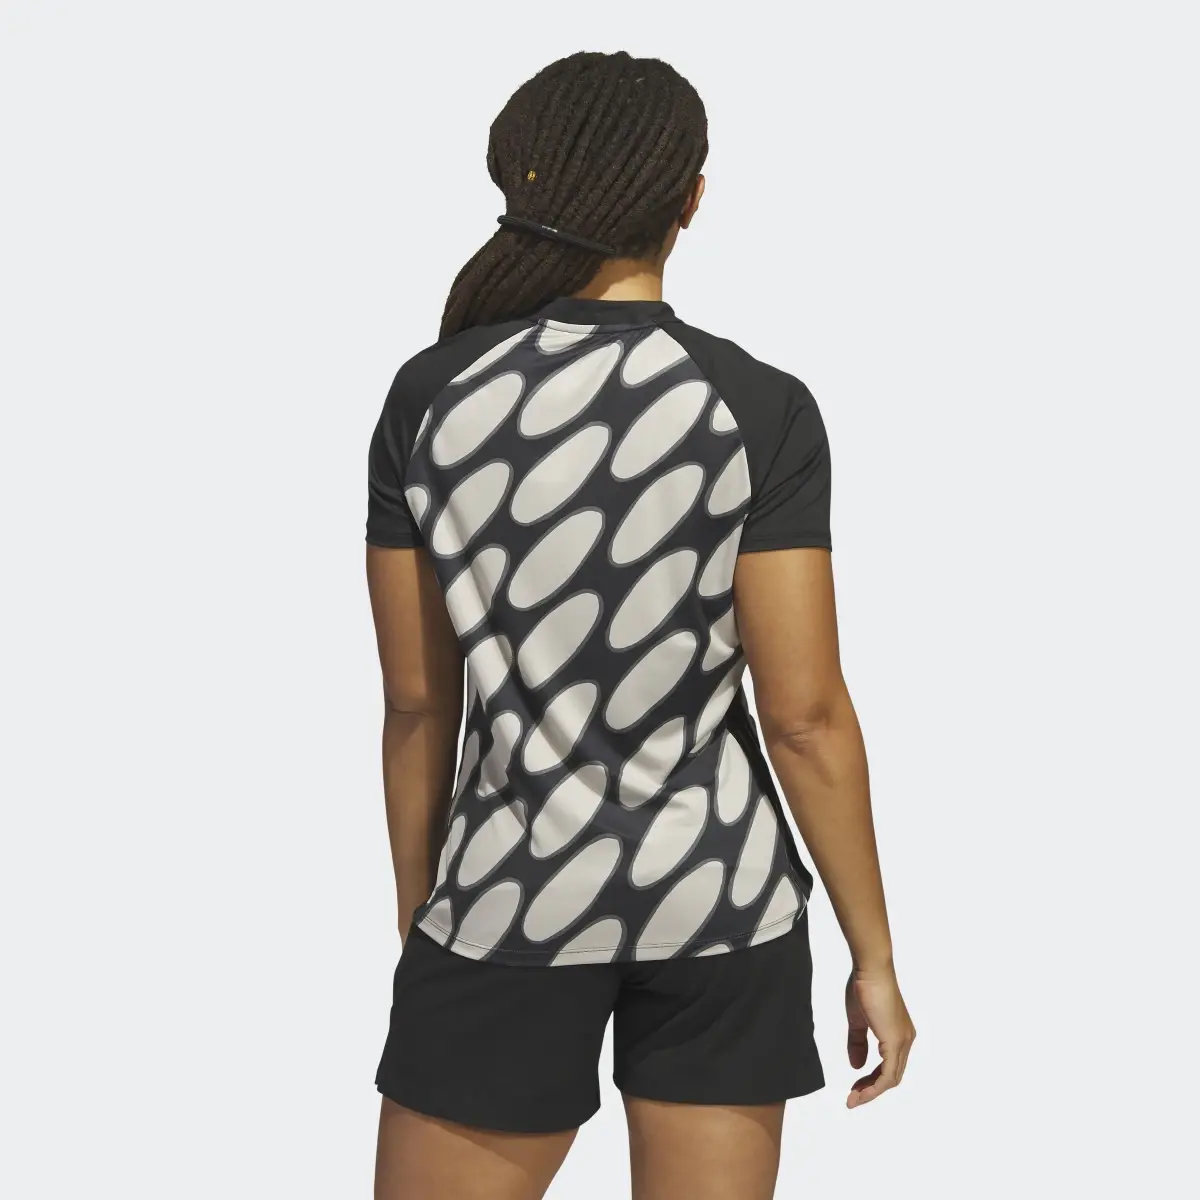 Adidas Marimekko Golf Polo Shirt. 3